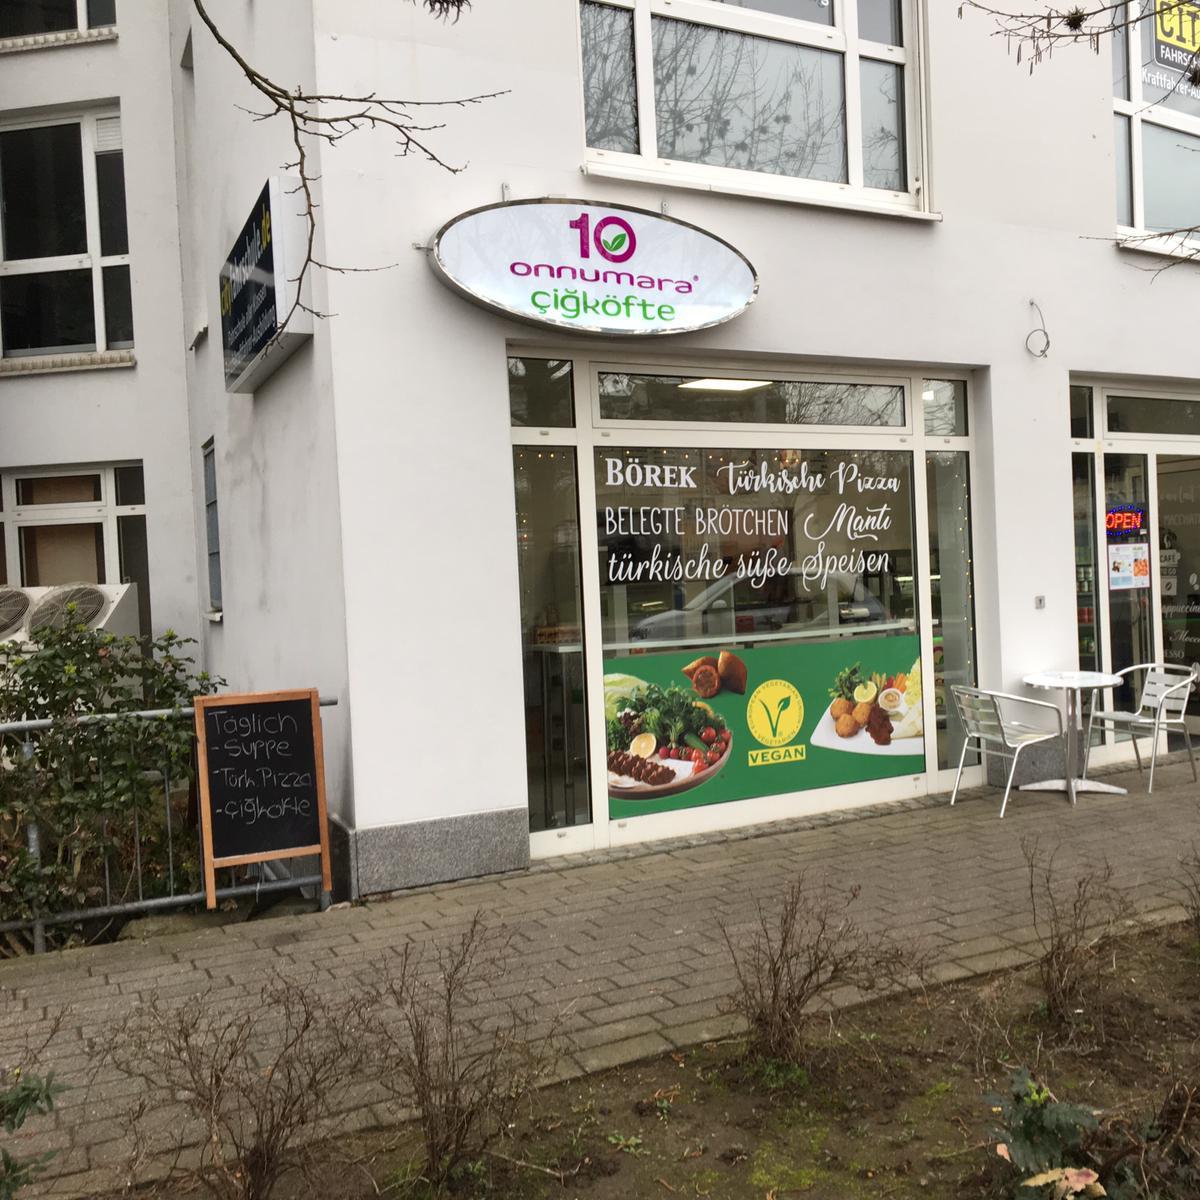 Restaurant "On Numara Cigköfte" in Troisdorf